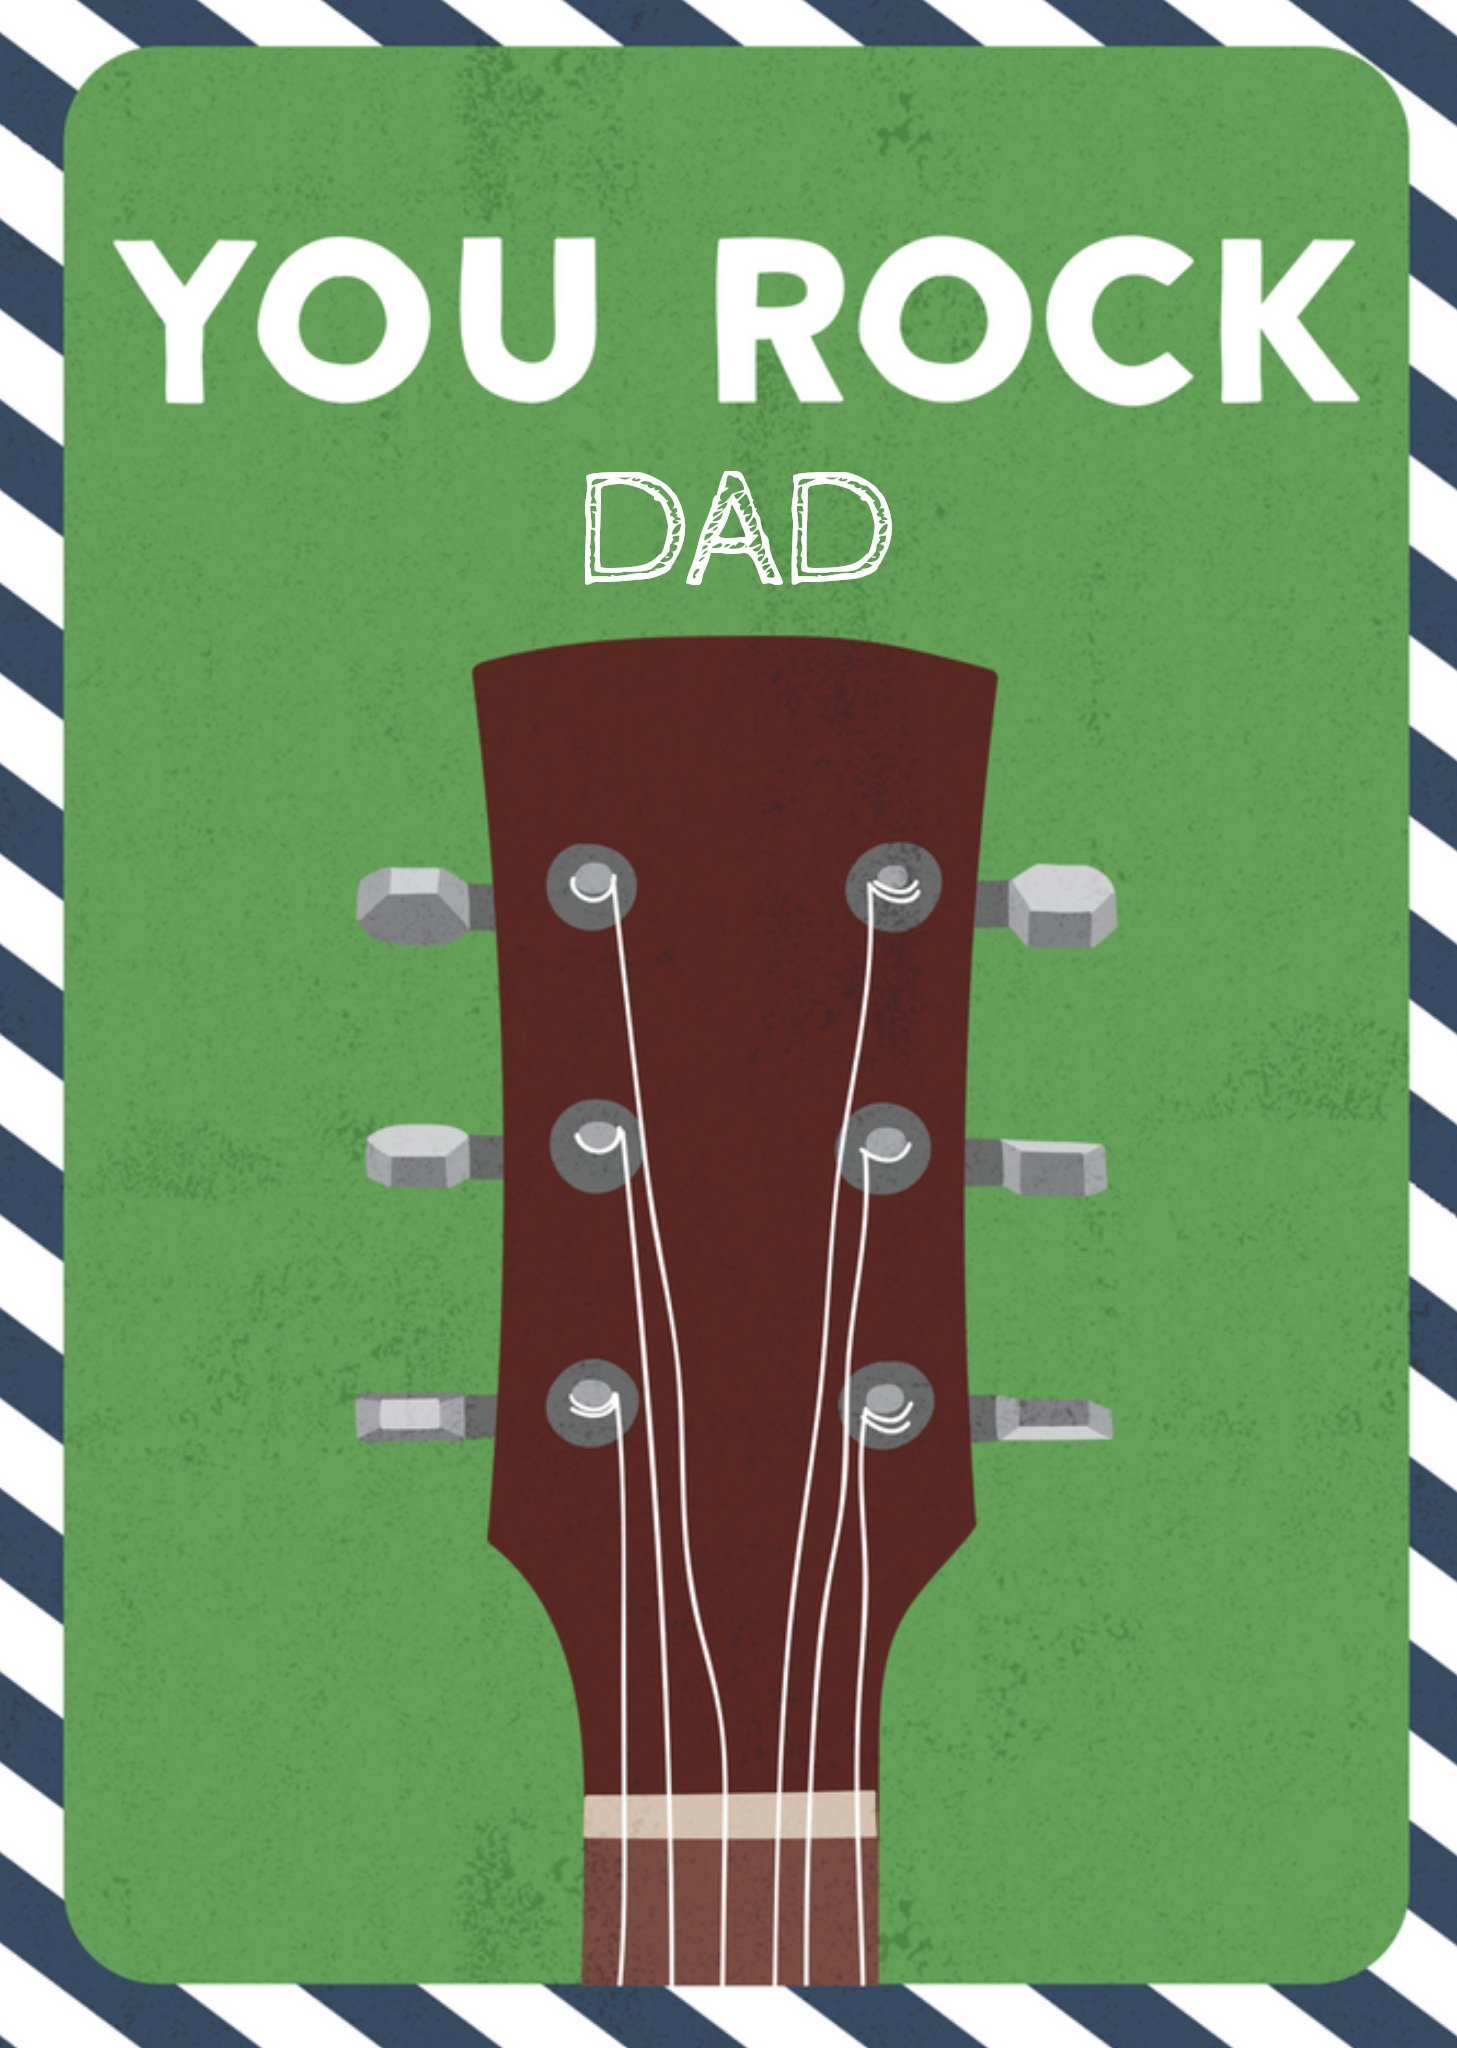 Verjaardagskaart - You rock dad